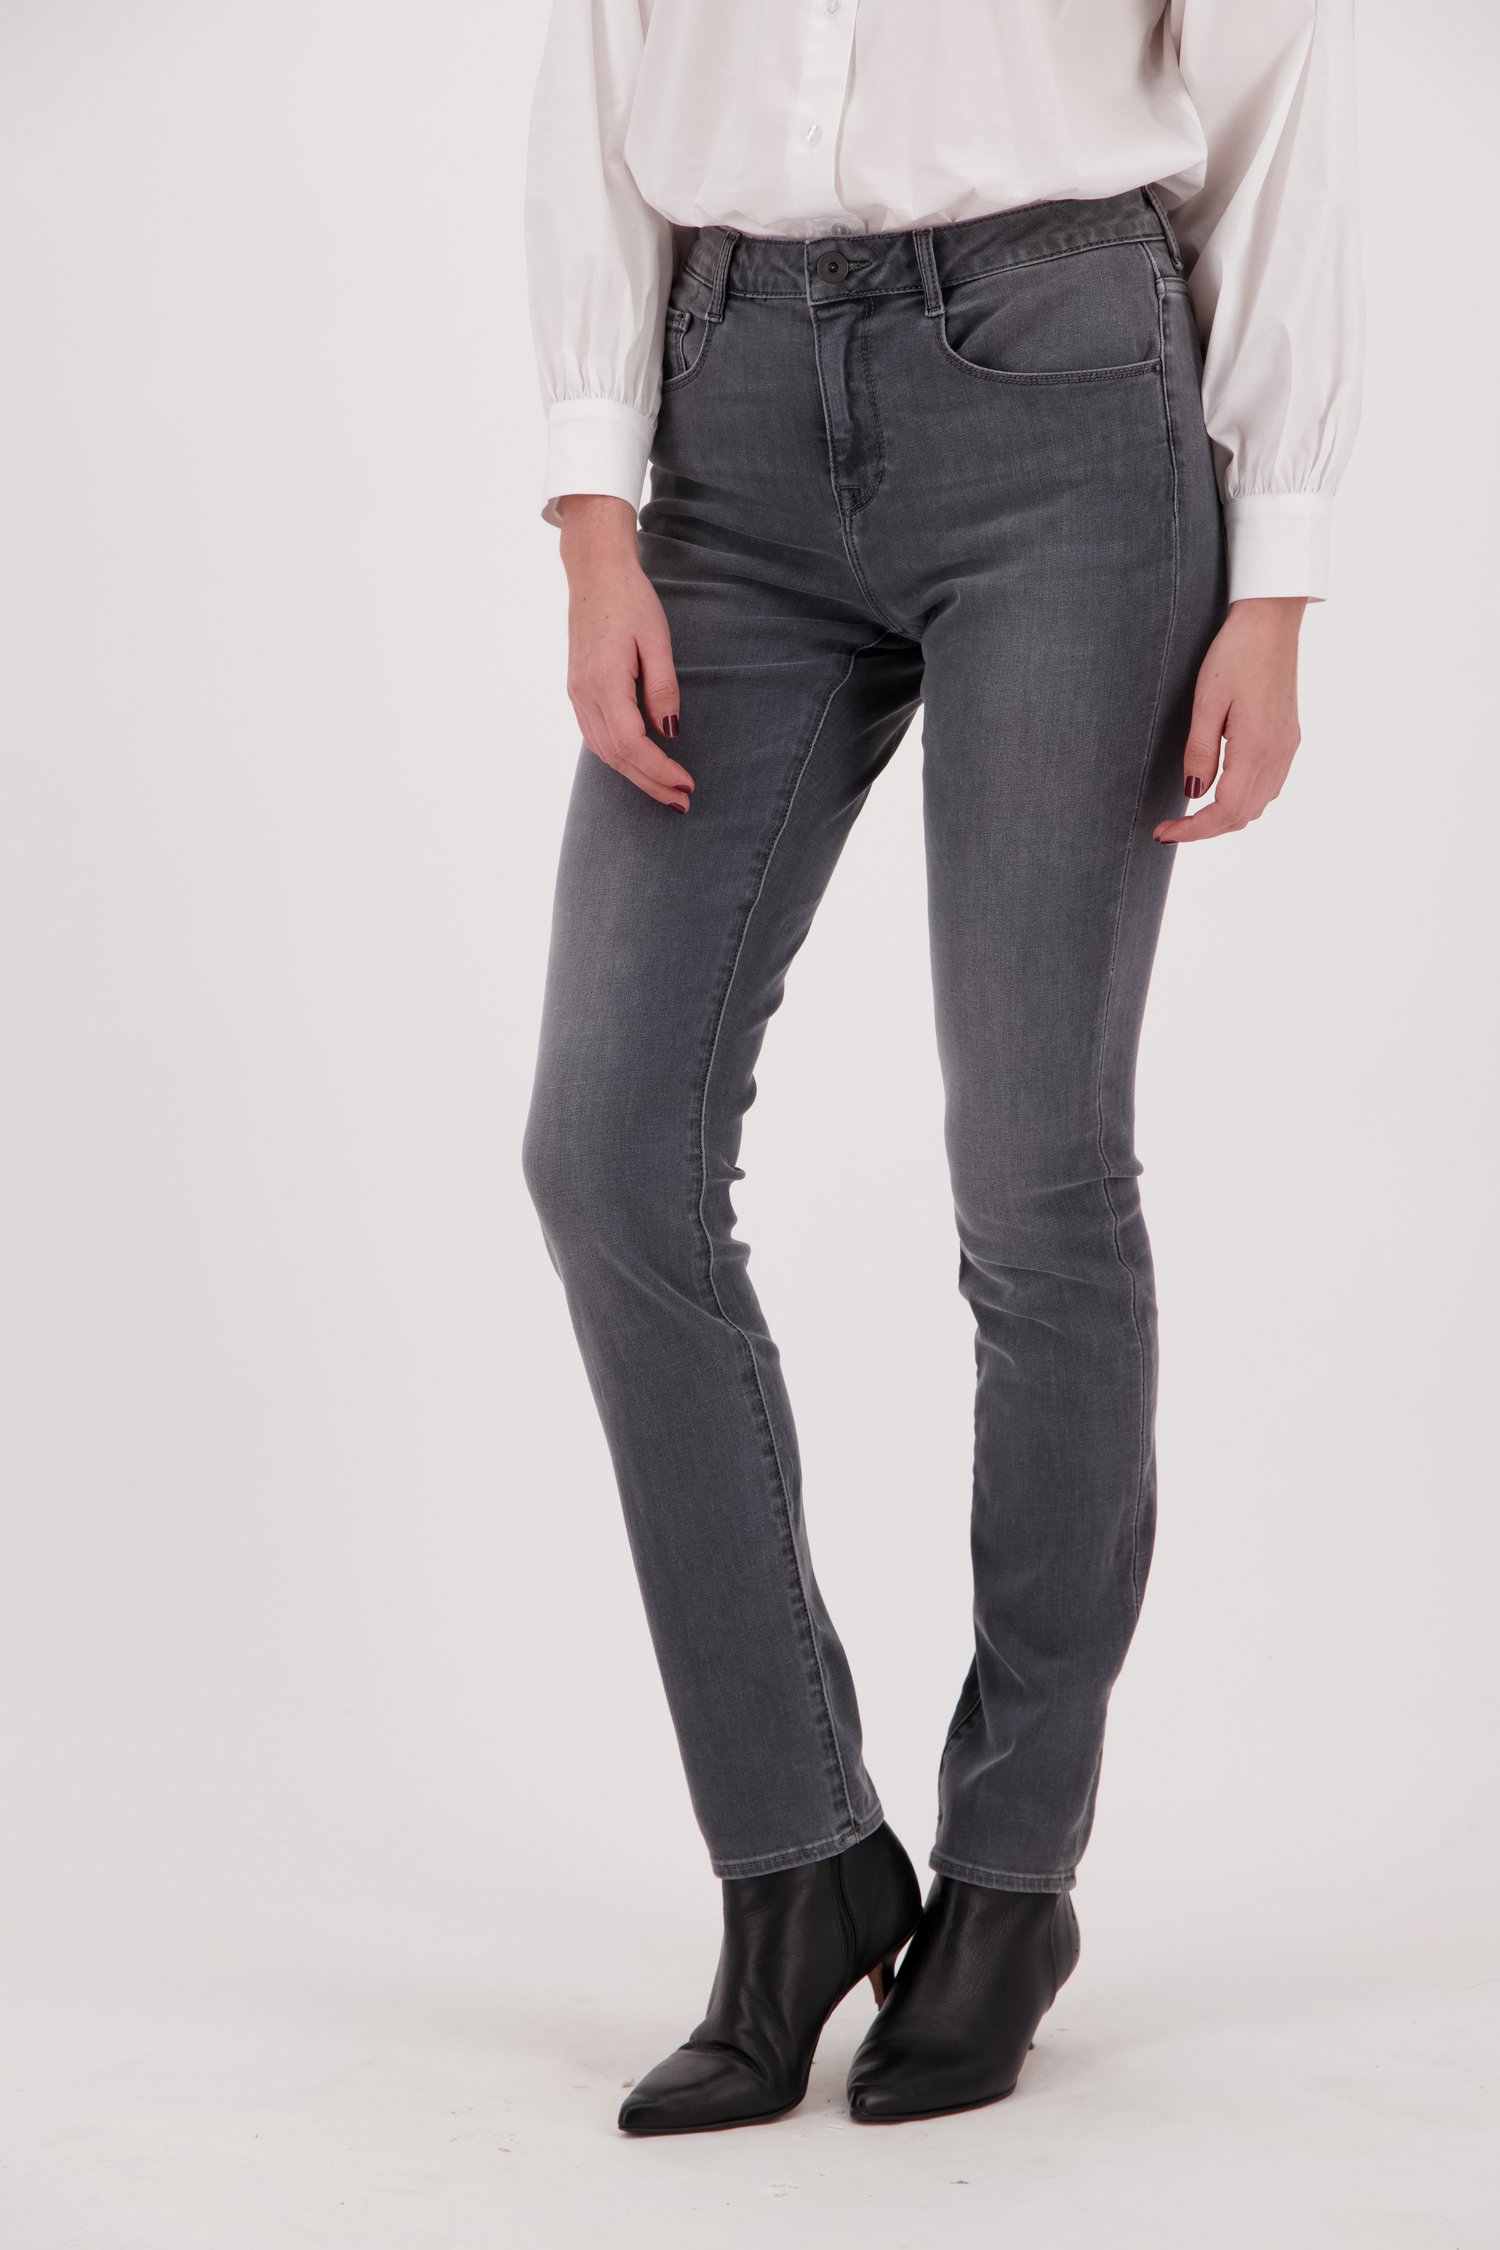 Lichtgrijze jeans - Lily - slim fit - L32 van Liberty Island Denim voor Dames